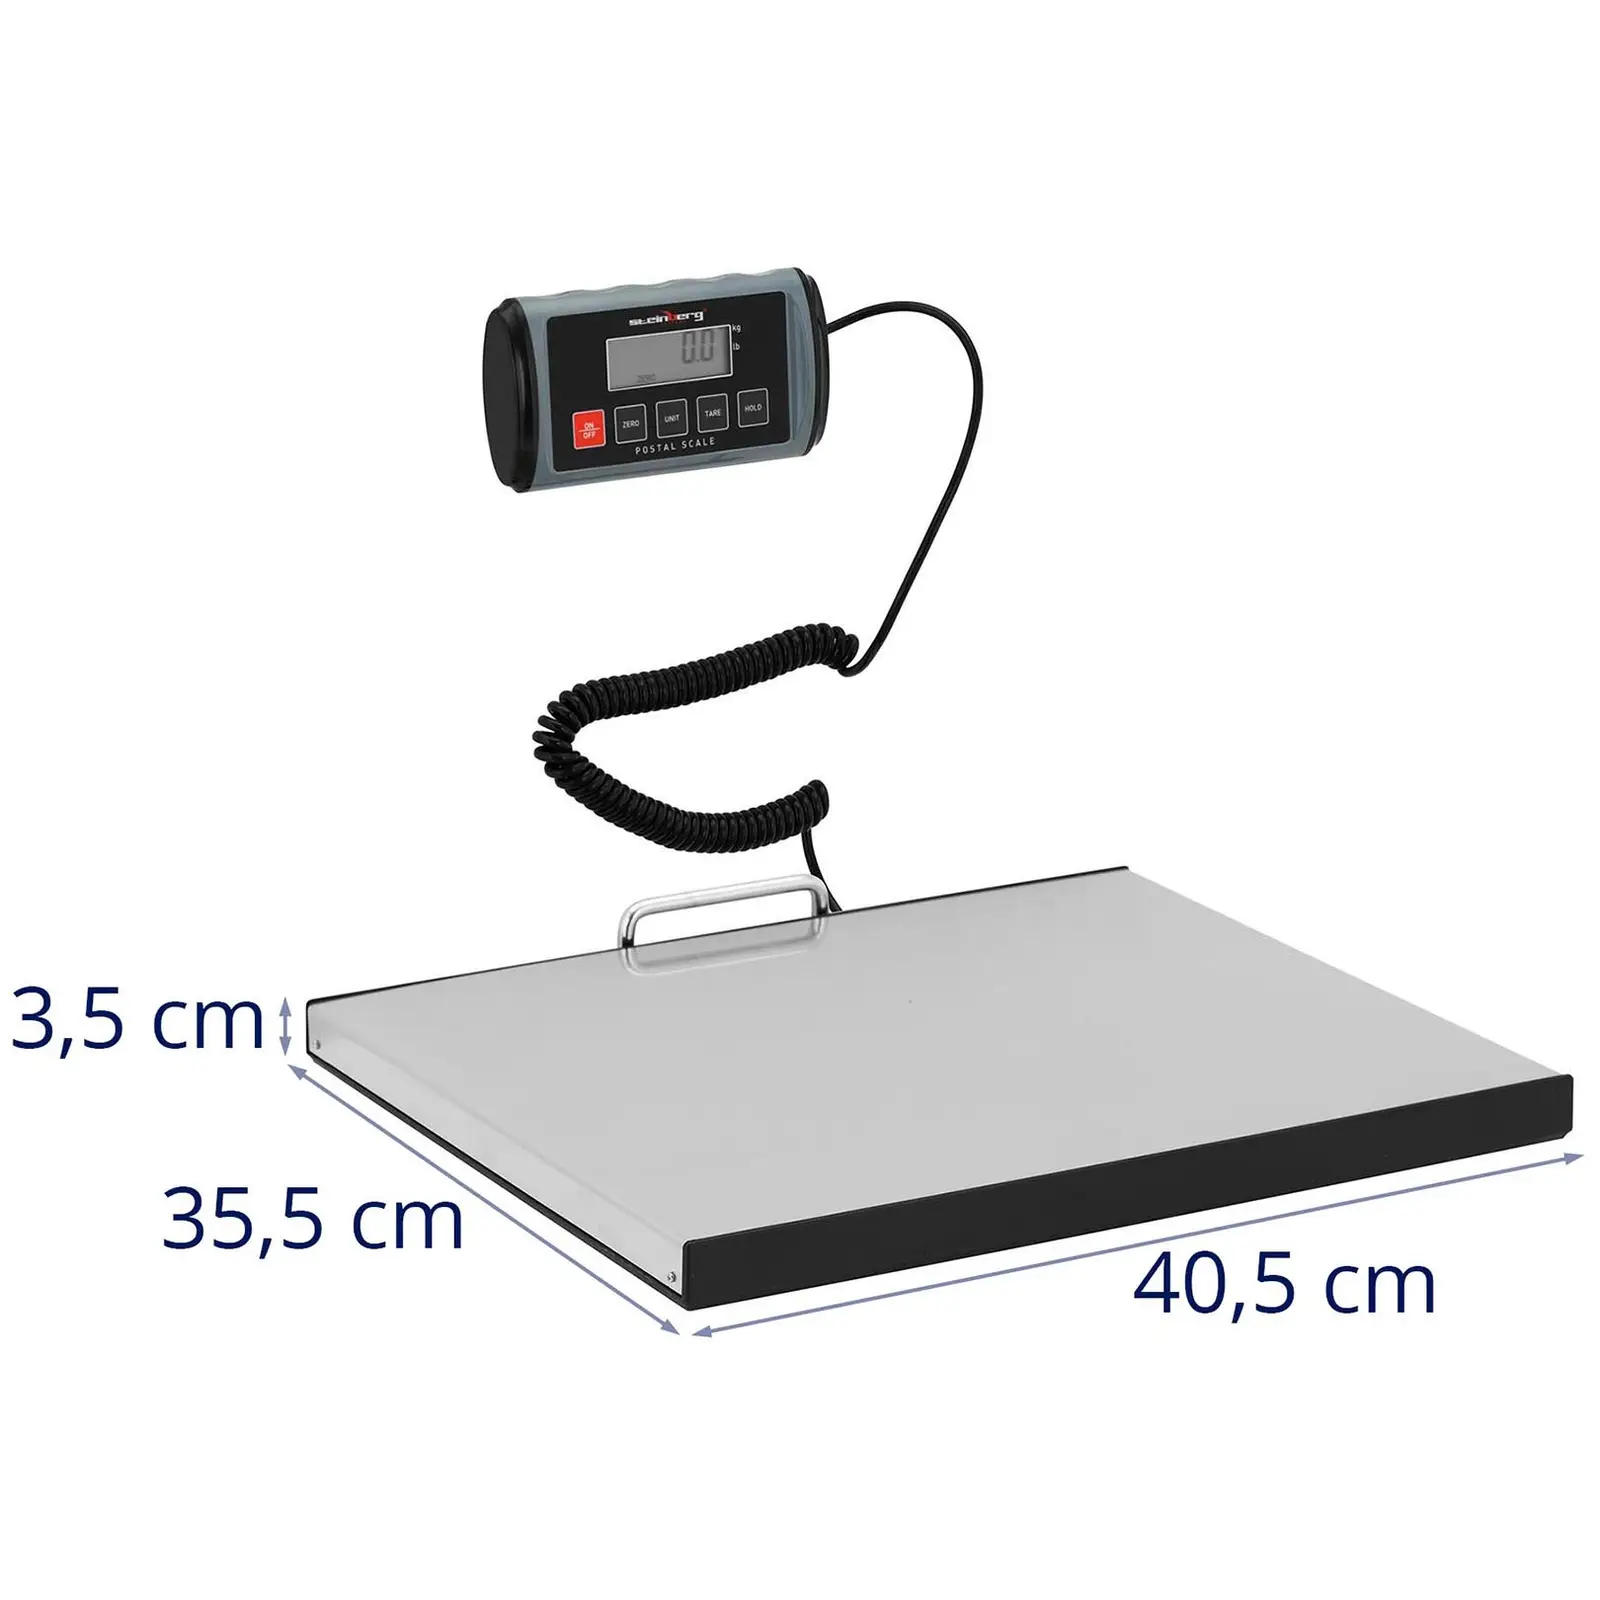 Báscula para paquetería - 200 kg / 0,1 kg - 35,5 x 40,5 cm - LCD externa